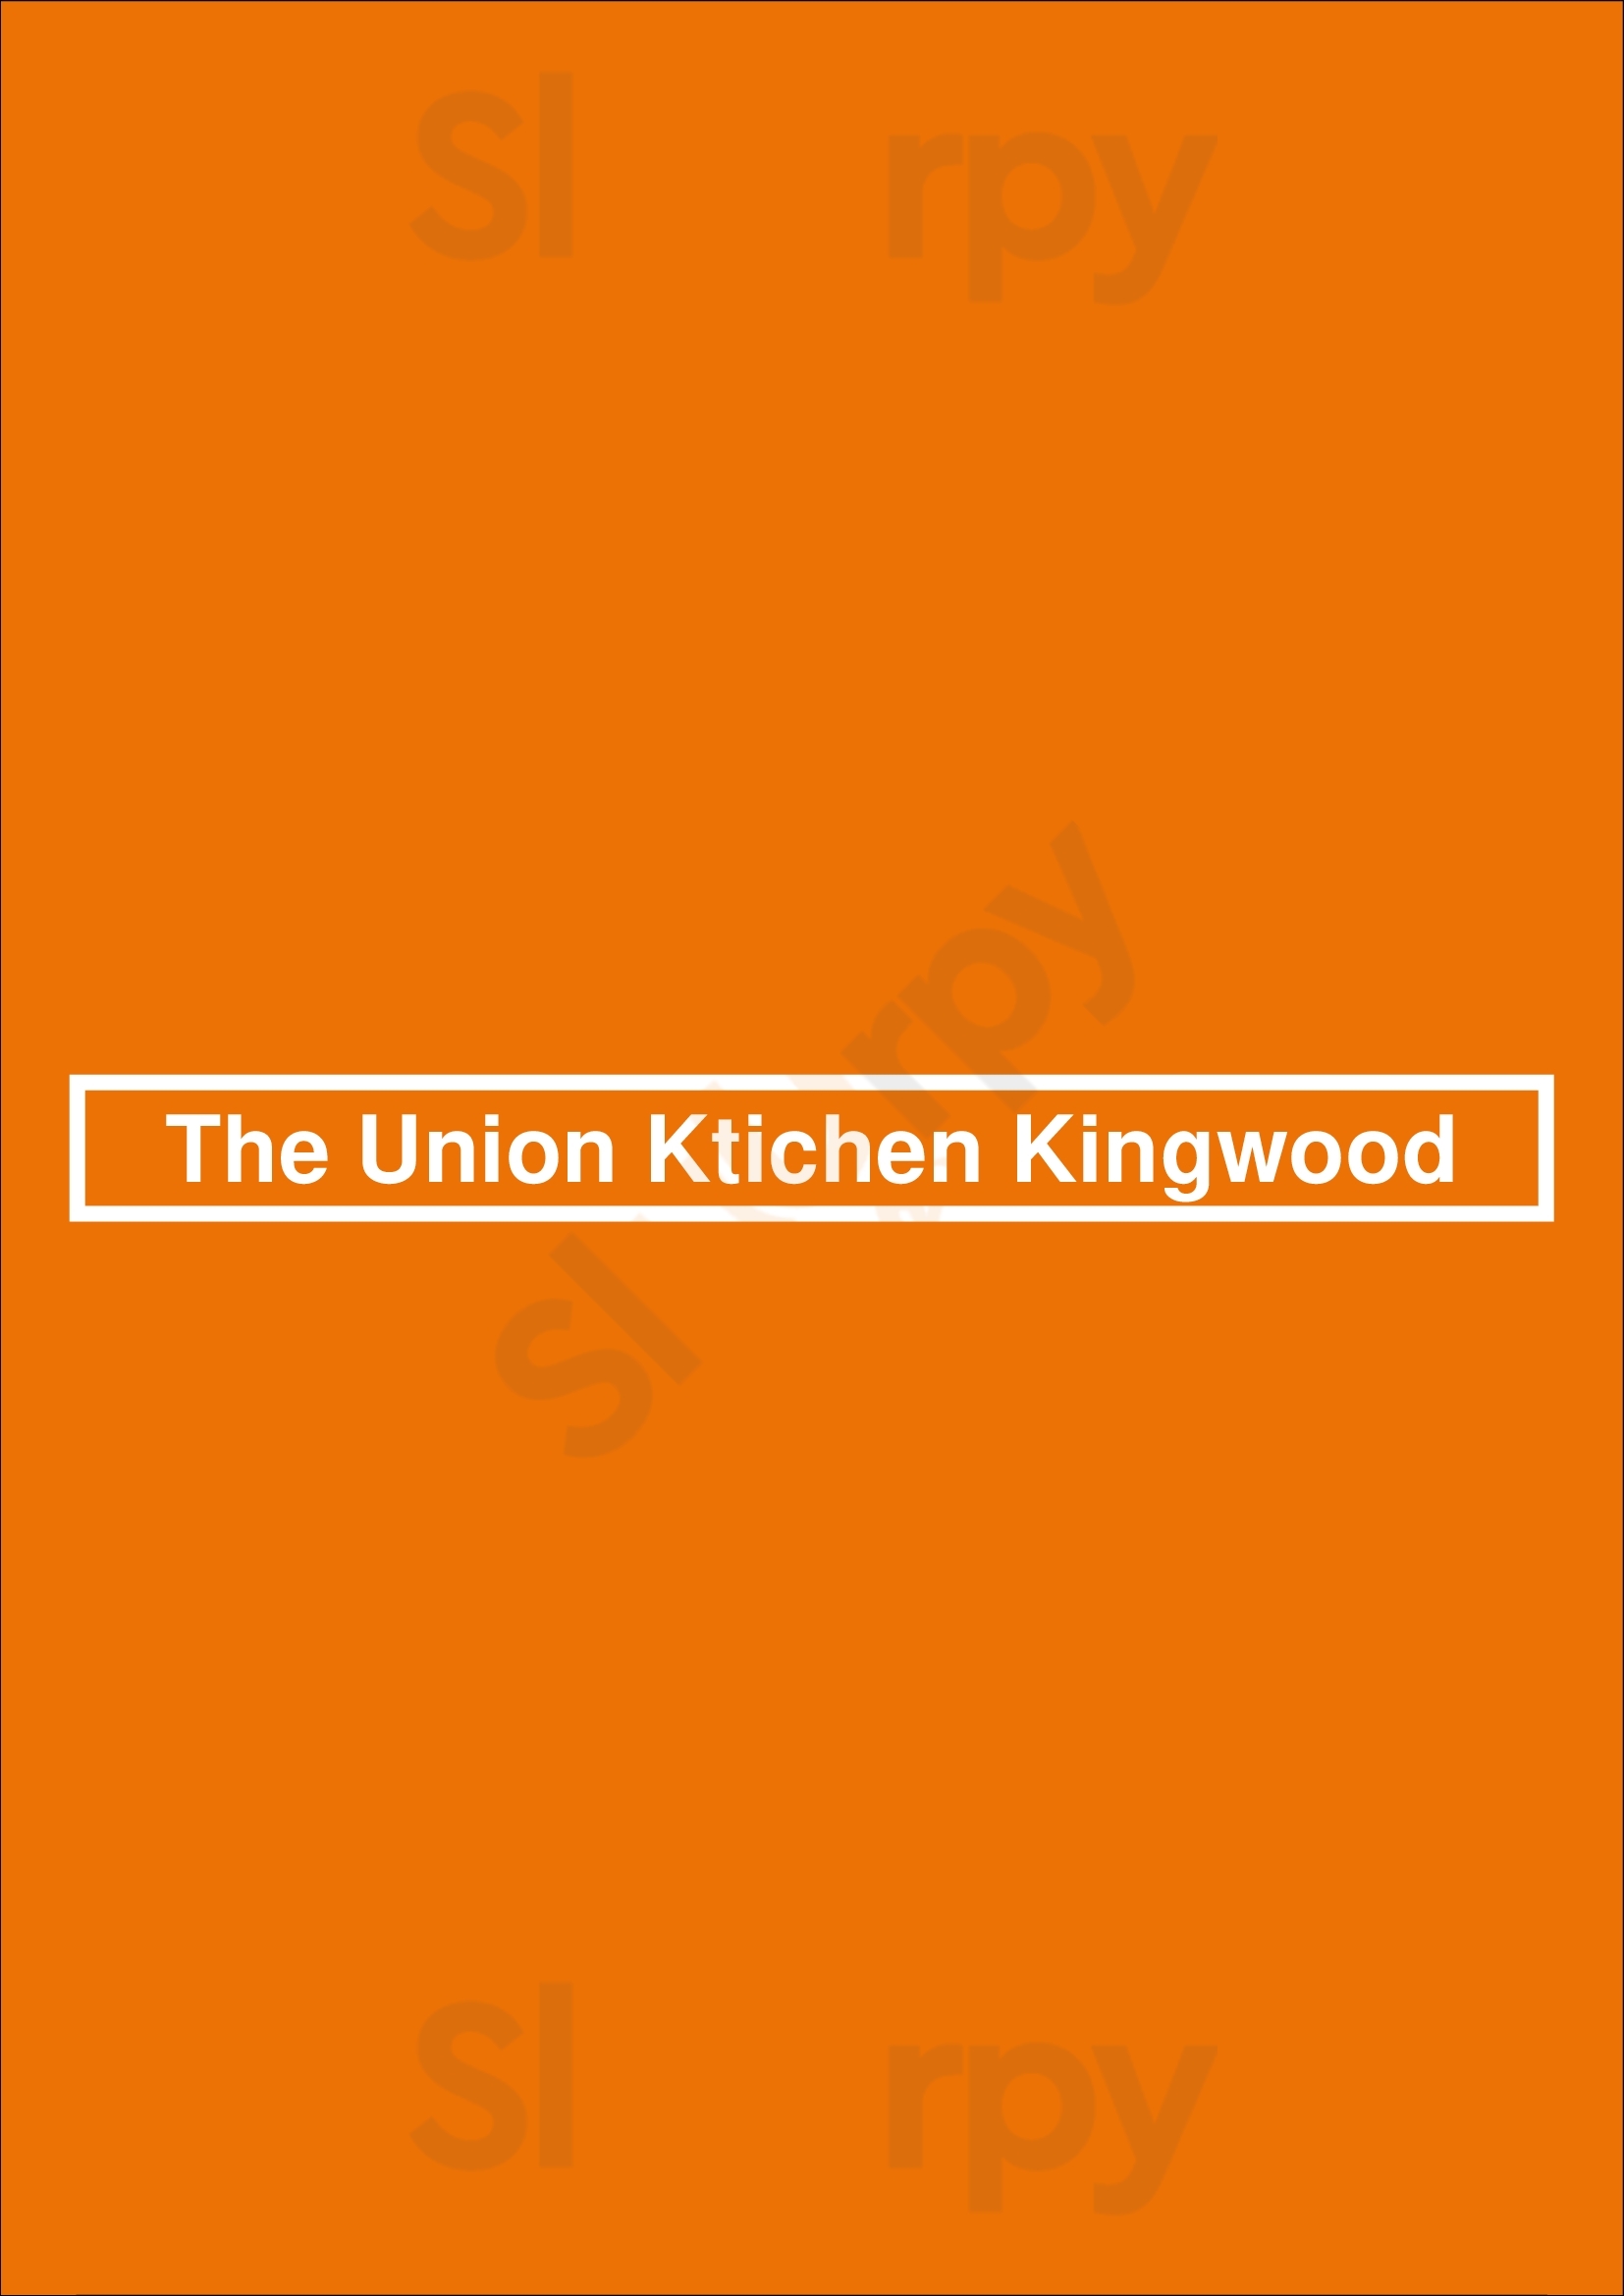 The Union Ktichen Kingwood Houston Menu - 1